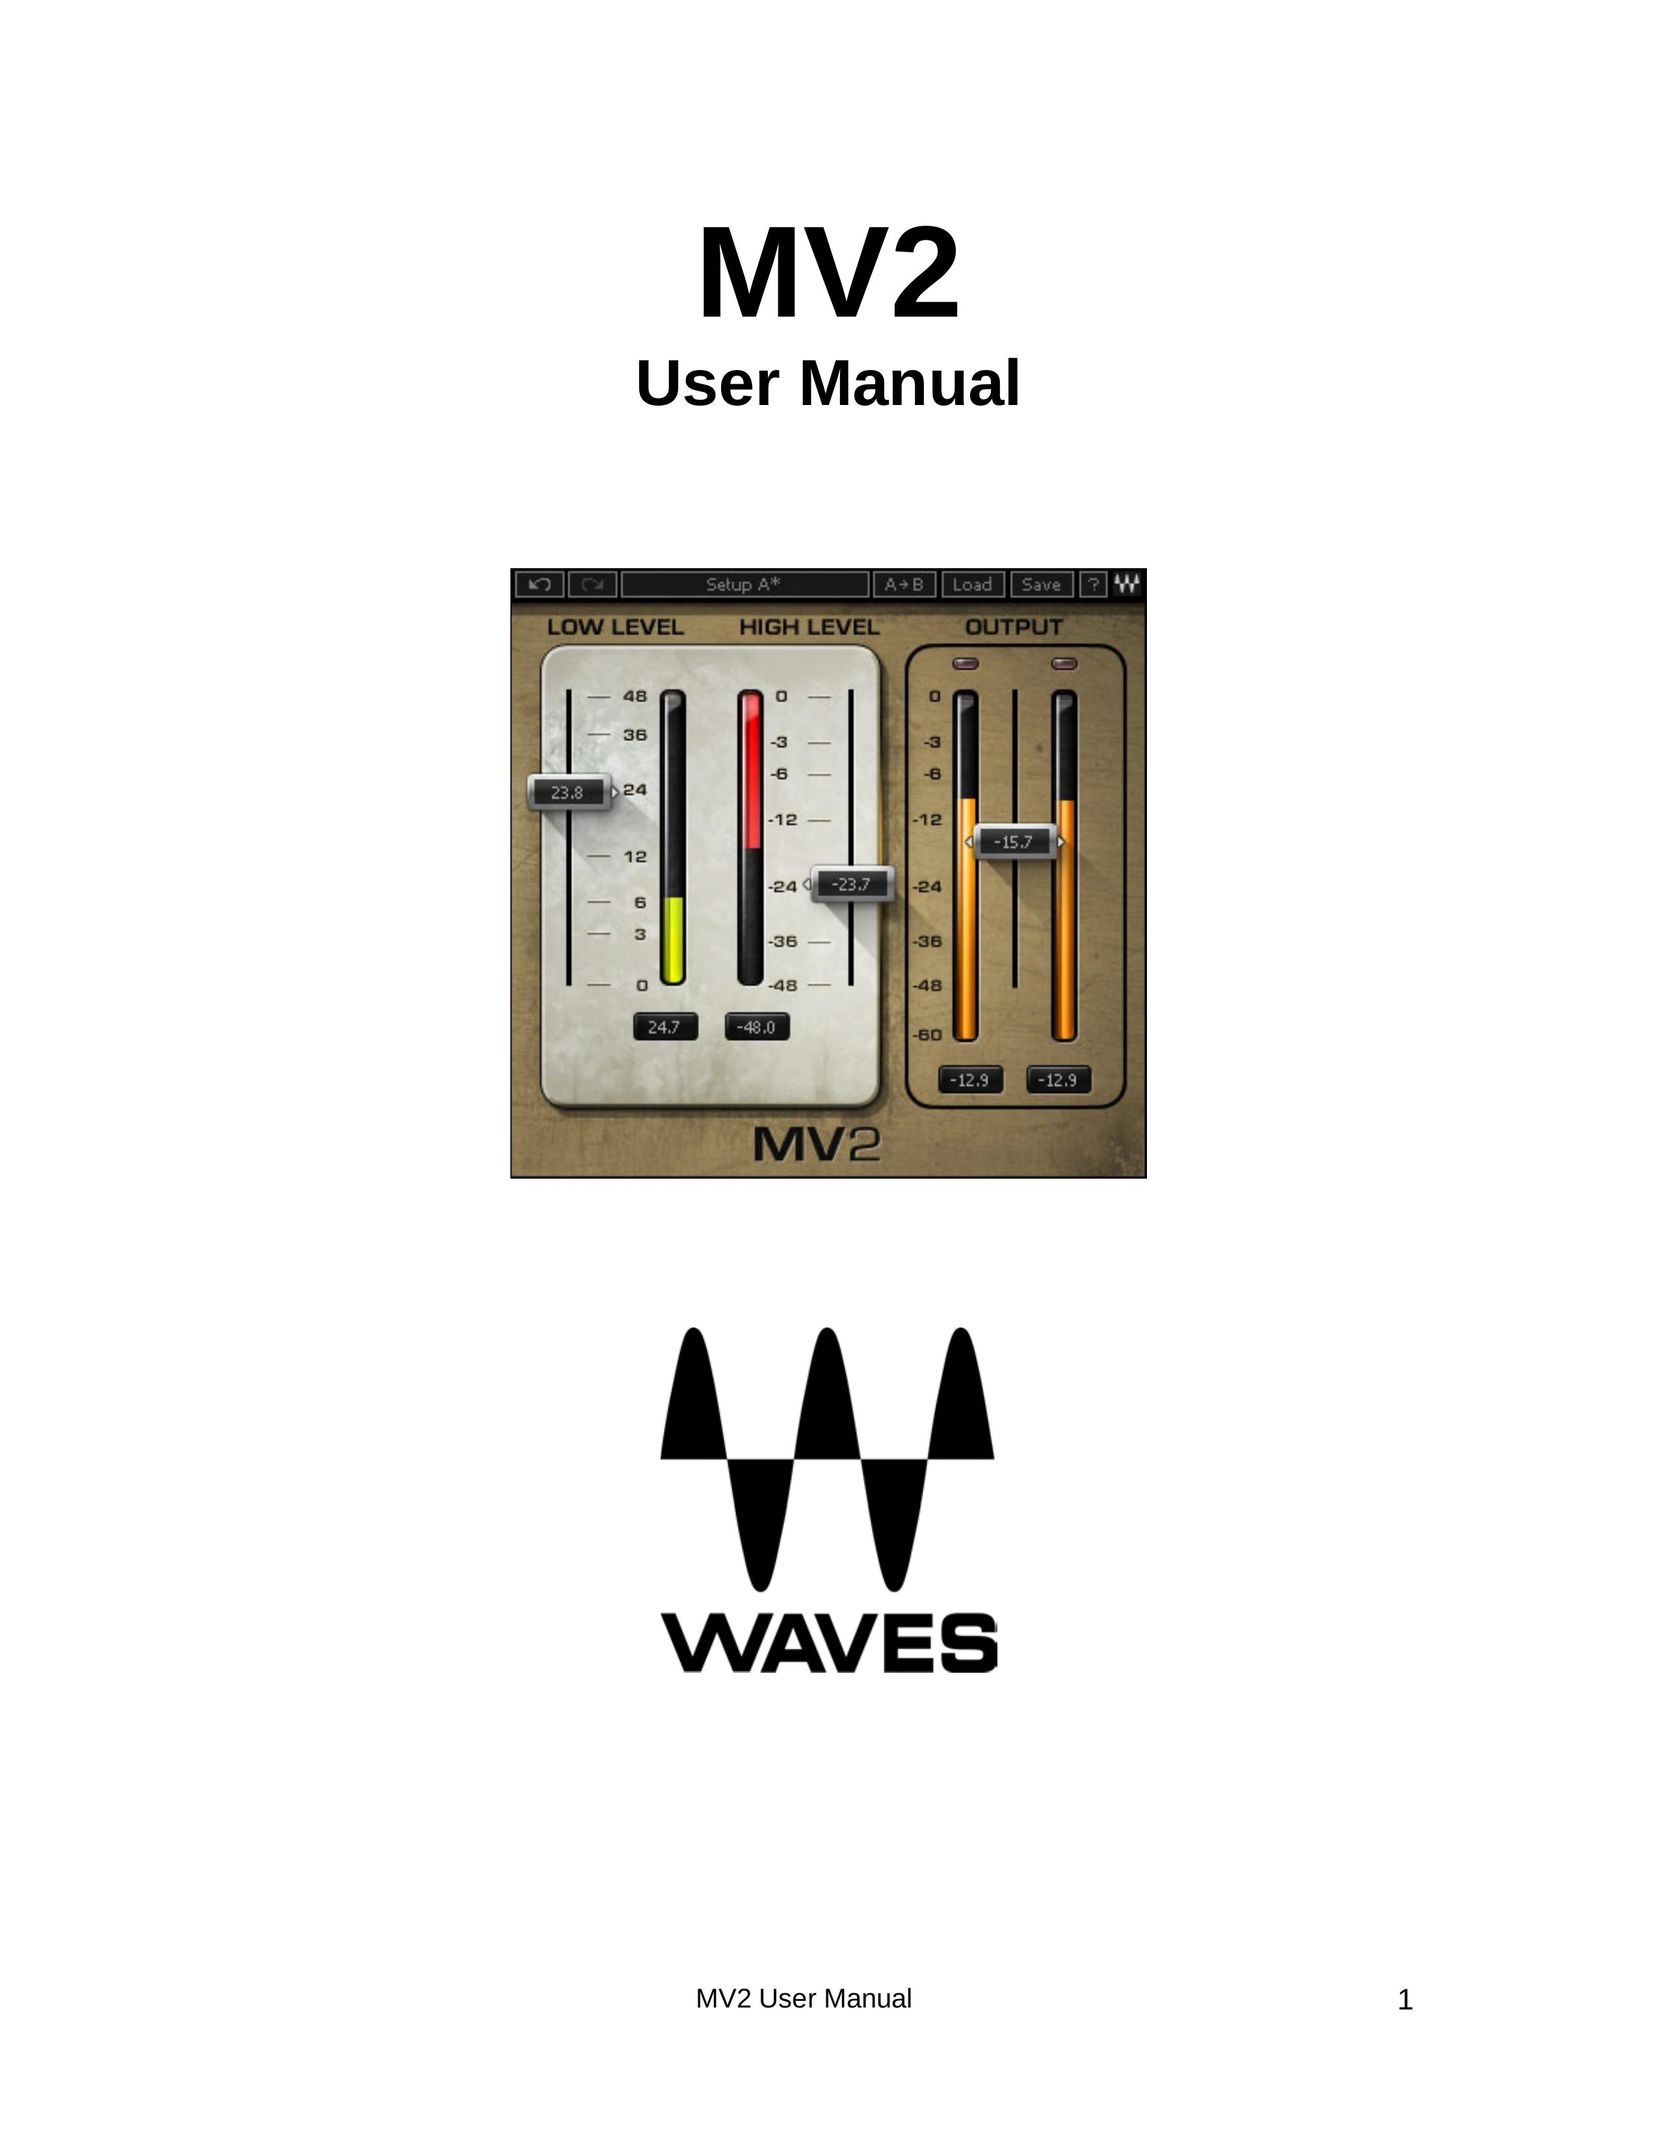 Waves MV2 Network Card User Manual